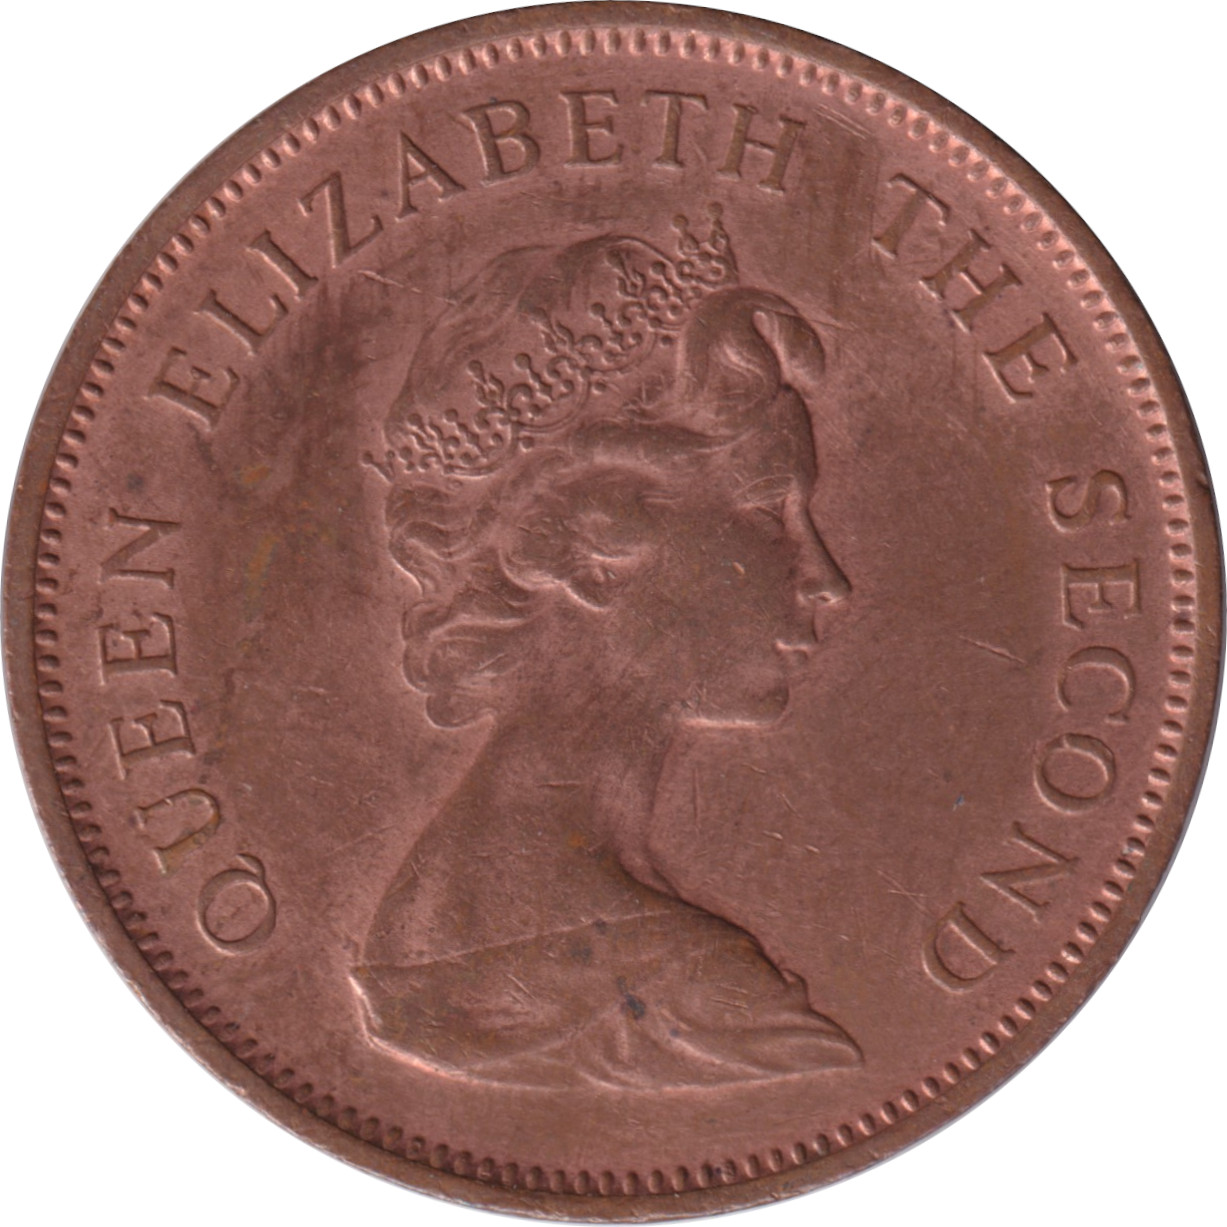 2 pence - Elizabeth II - Buste jeune - Two Pence